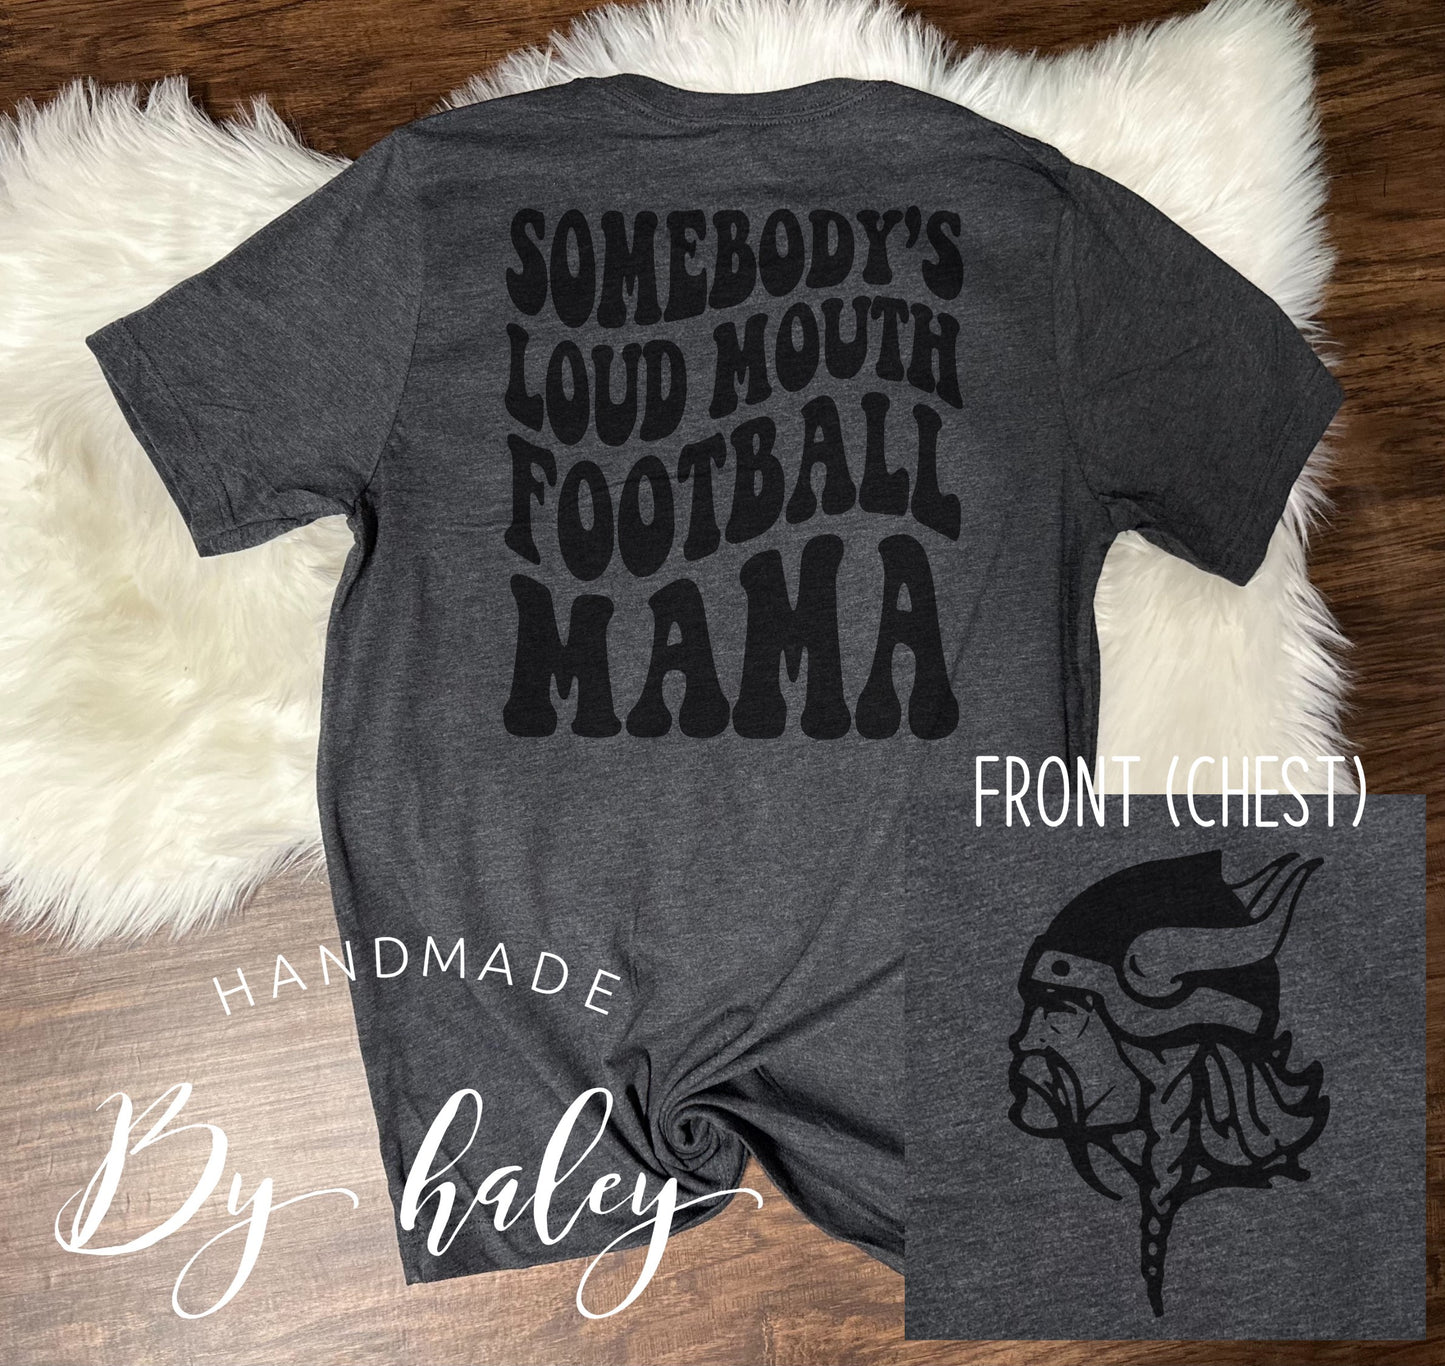 Loud Mouth Football Mama (Vikings) T-Shirt